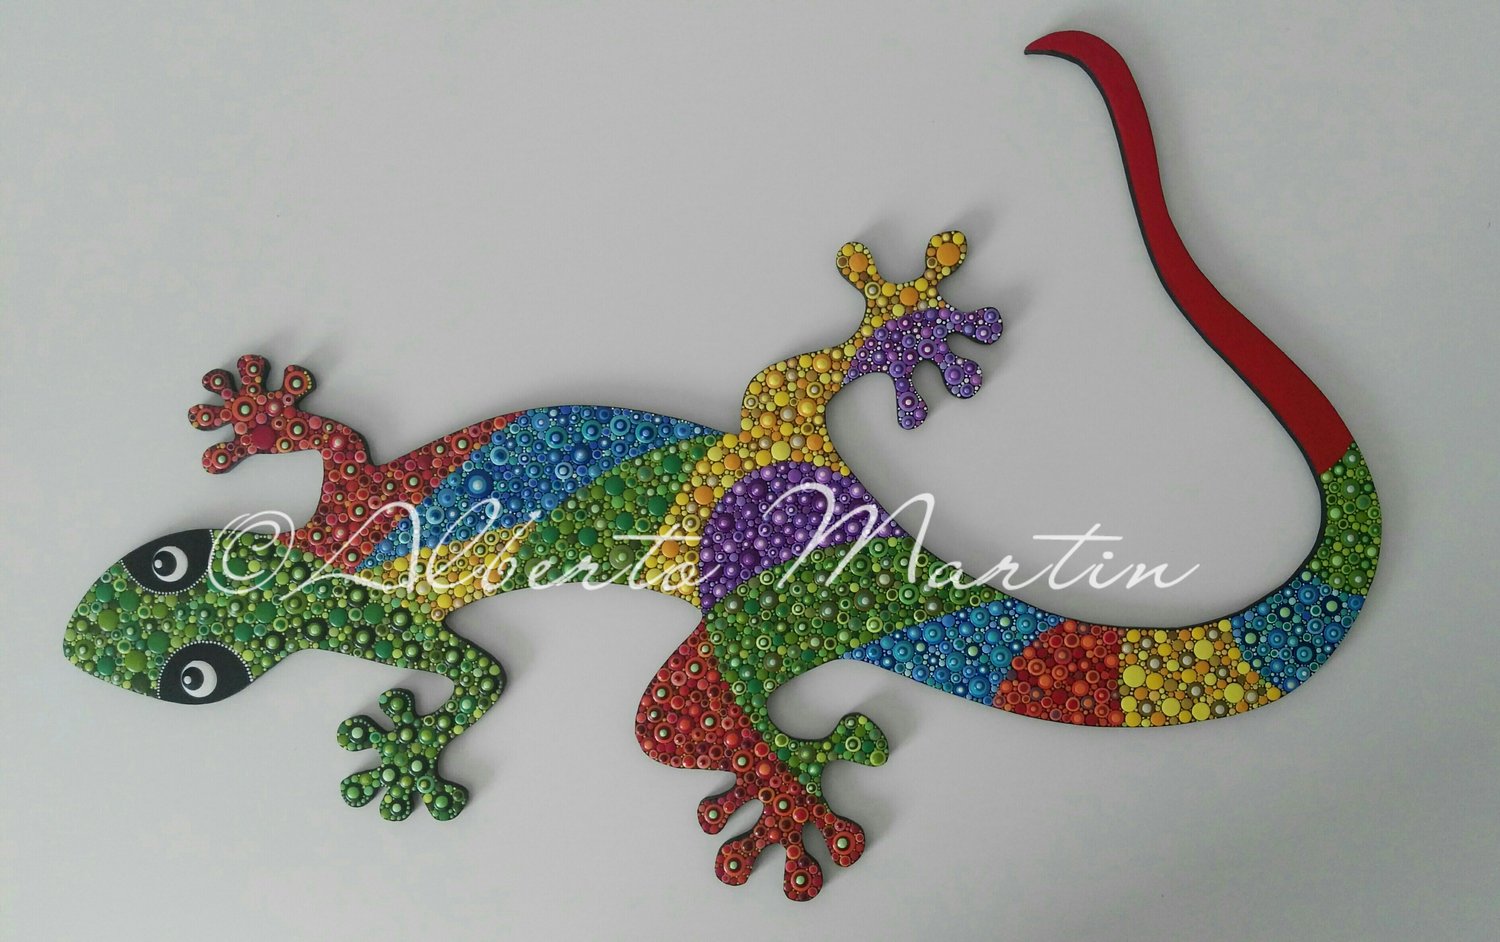 Image of Lizard - Gecko 9/ dot art mdf/ handpainted/ Gift ideas/ by Alberto Martin